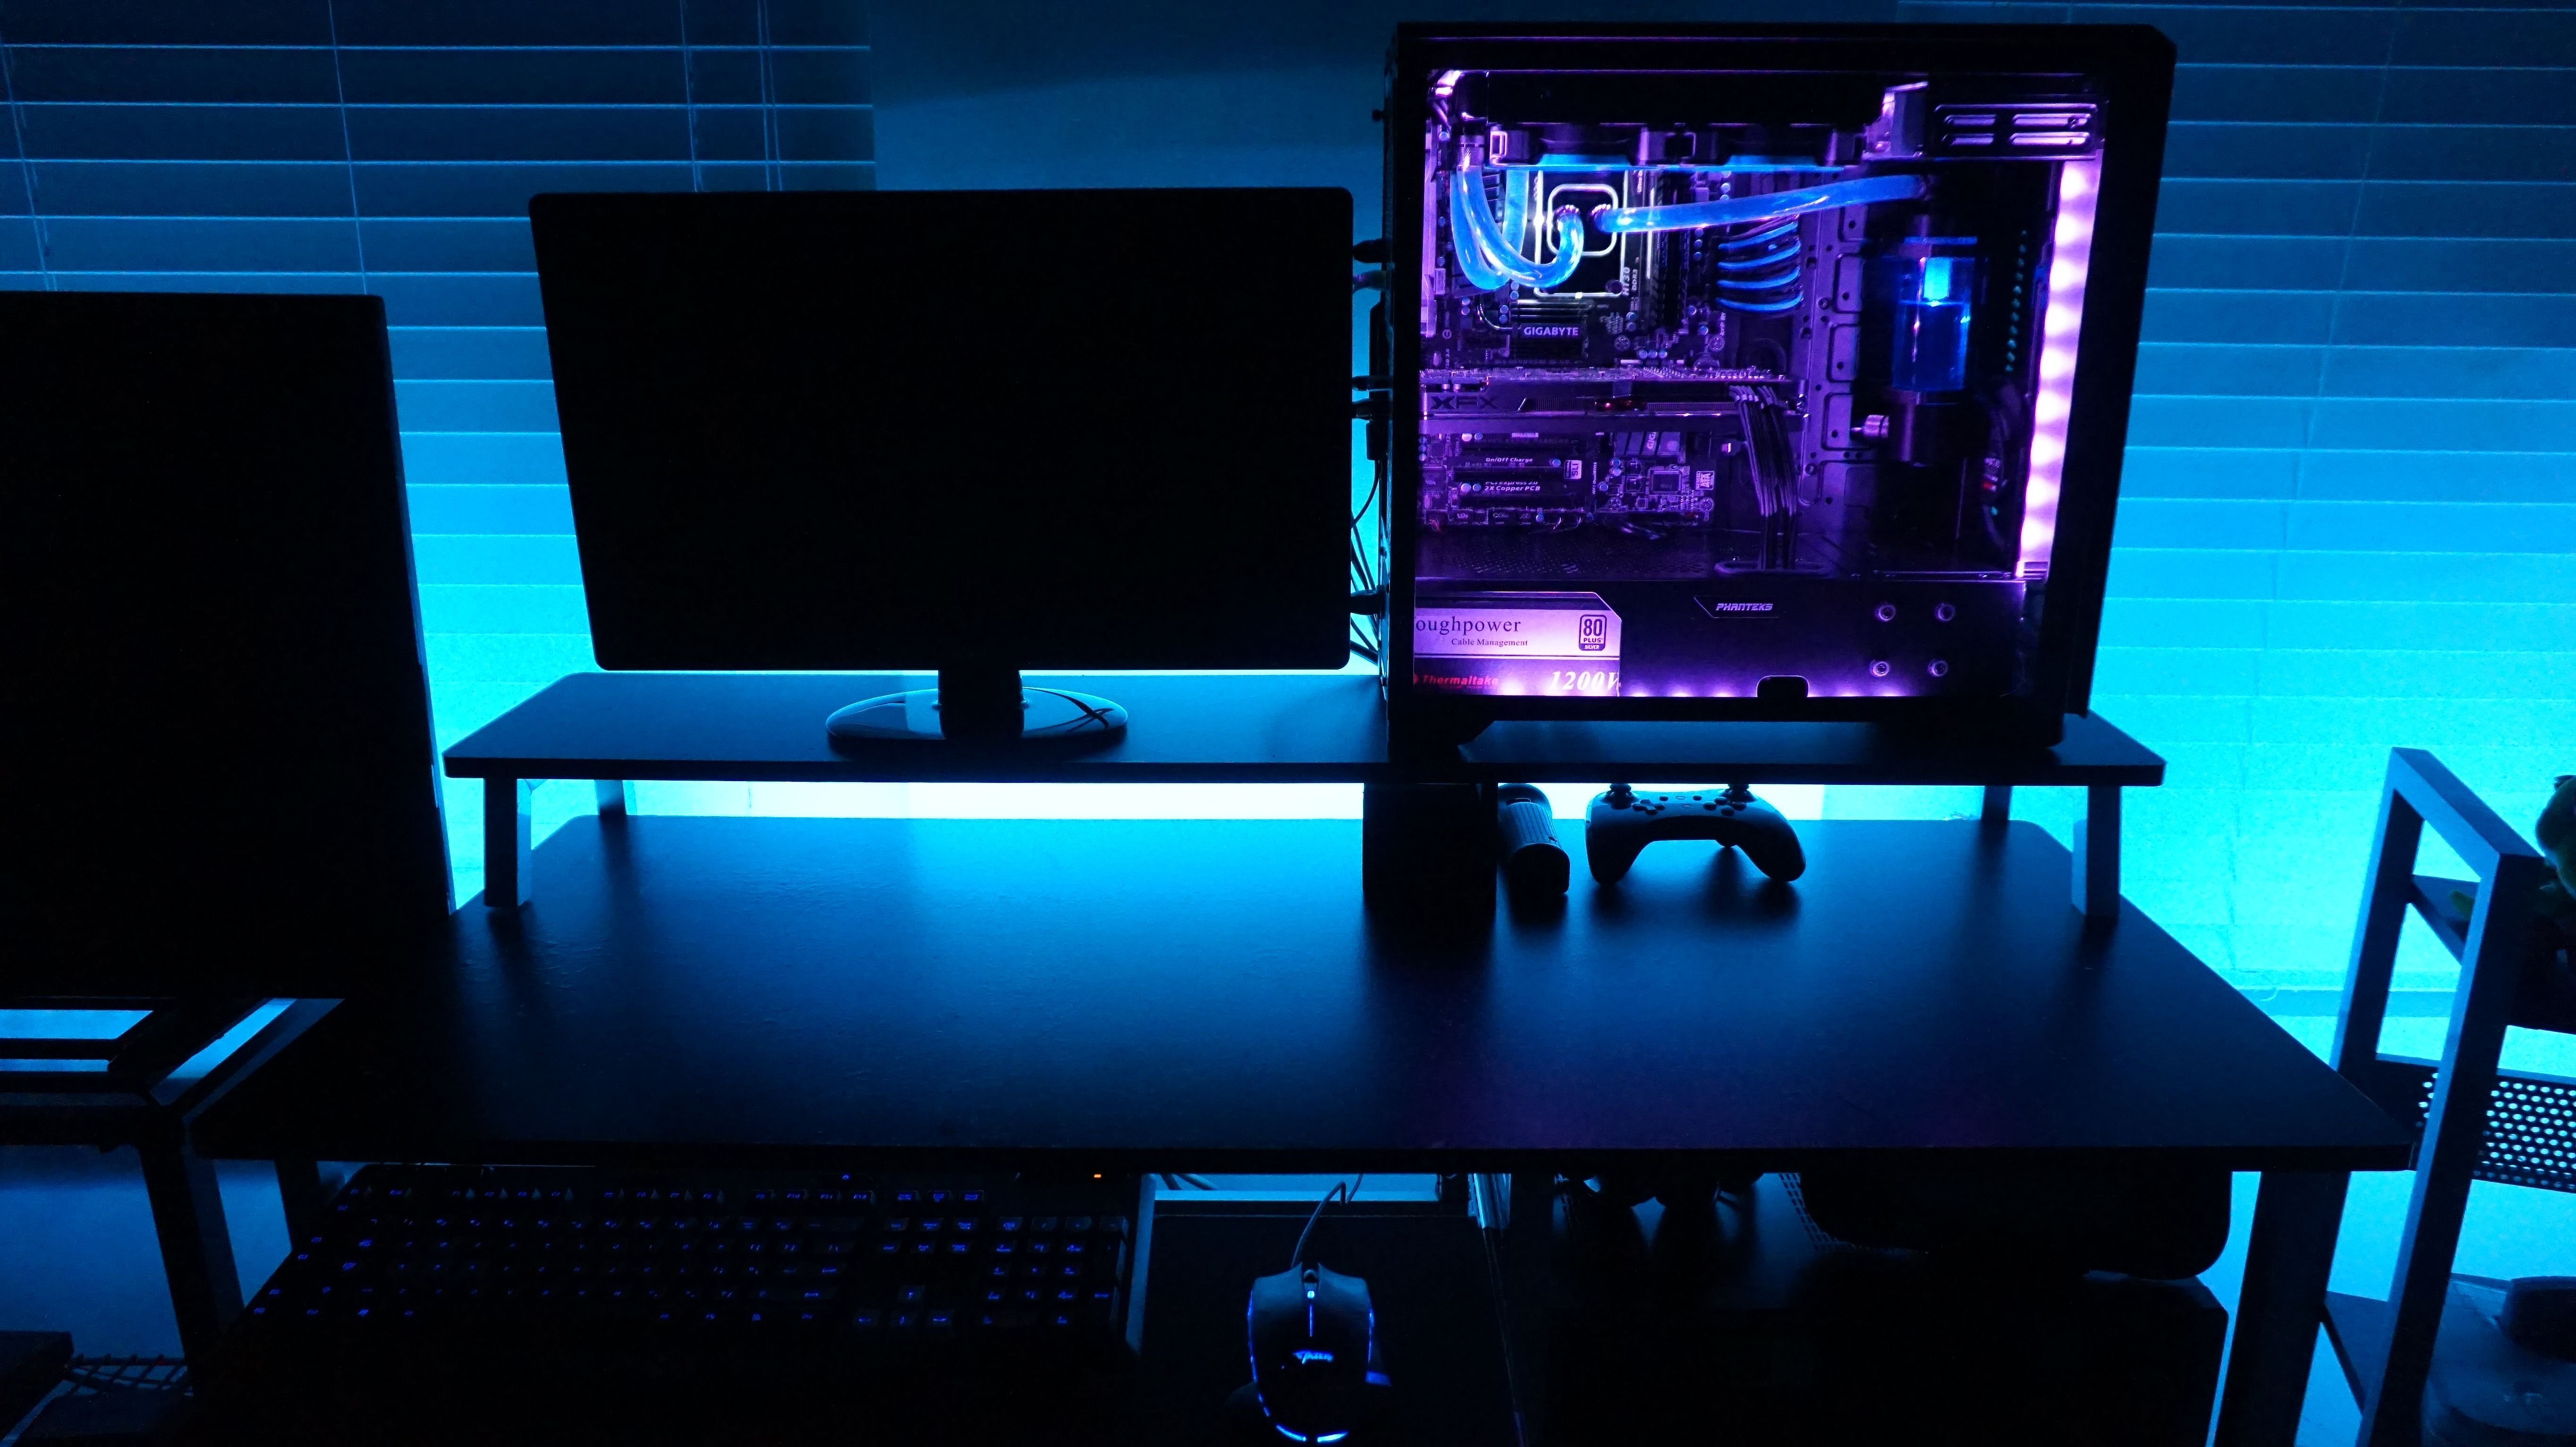 My gaming pc. Красивый компьютер. Компьютерный стол игровой. ПК В столе. Компьютерный стол игровой с подсветкой.